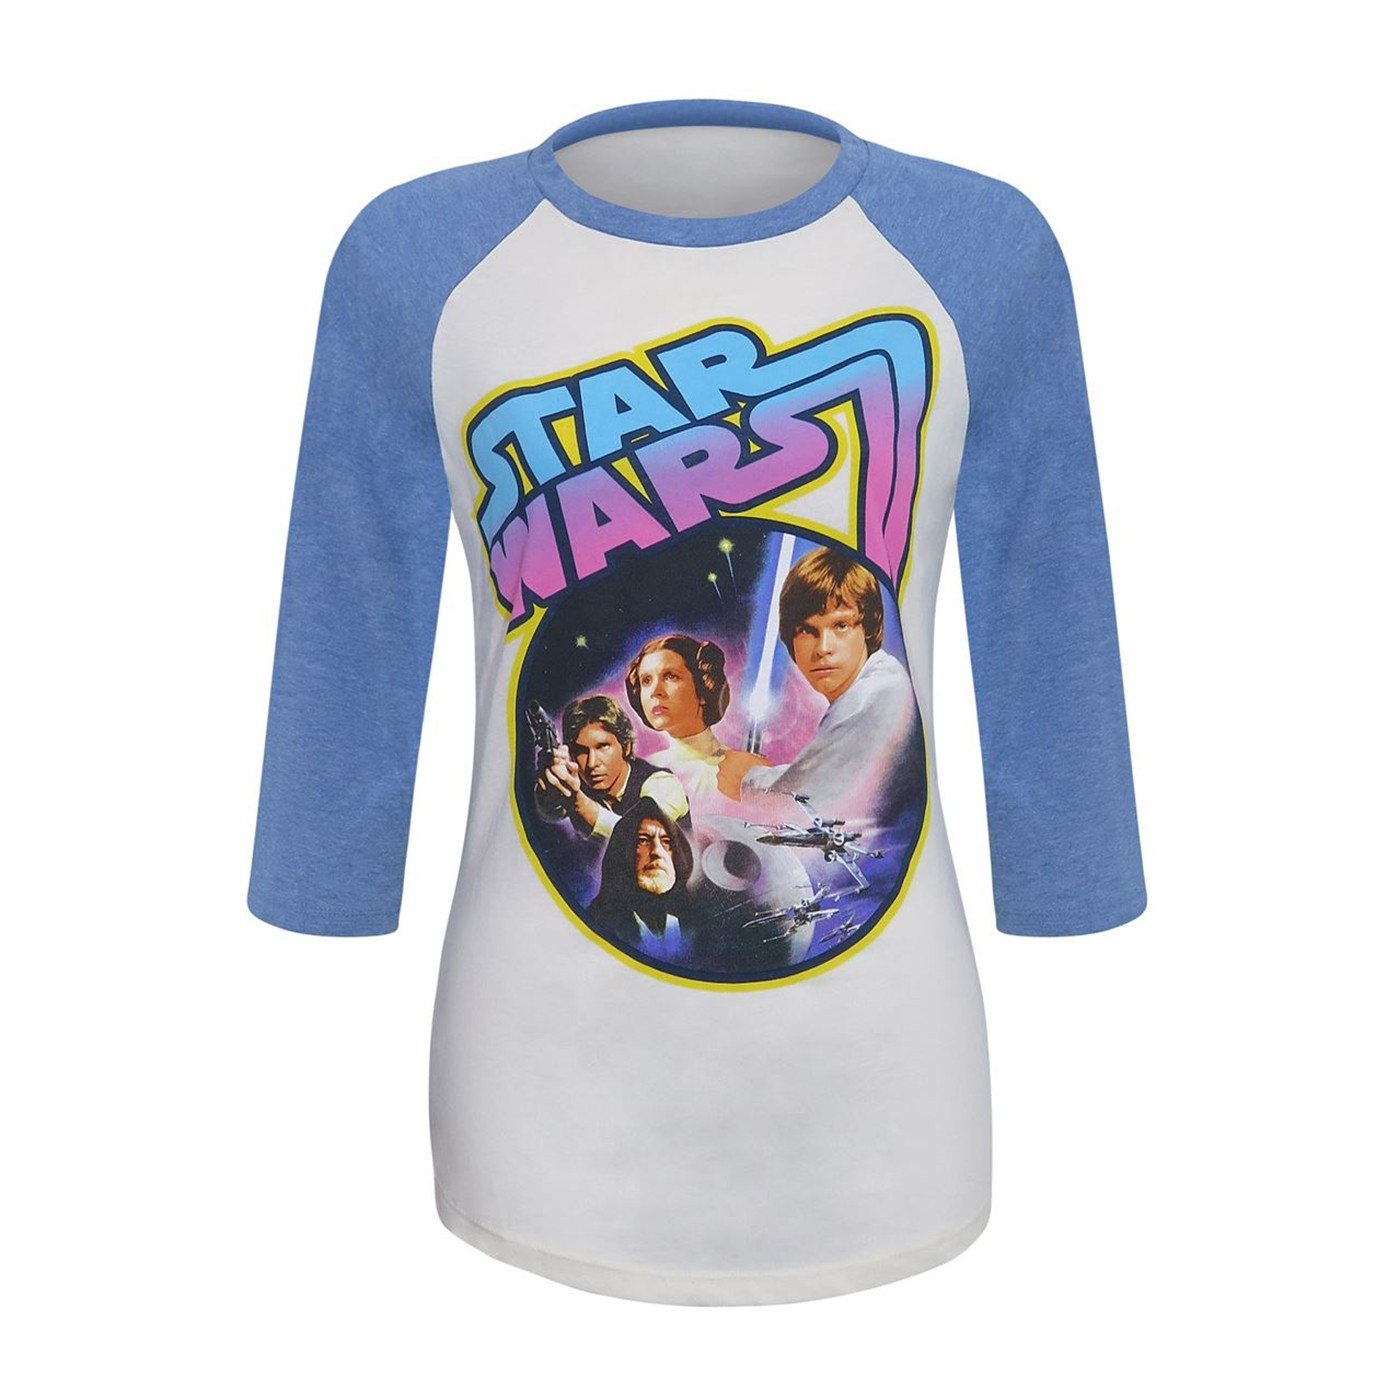 Star Wars New Hope Women's Baseball T-Shirt